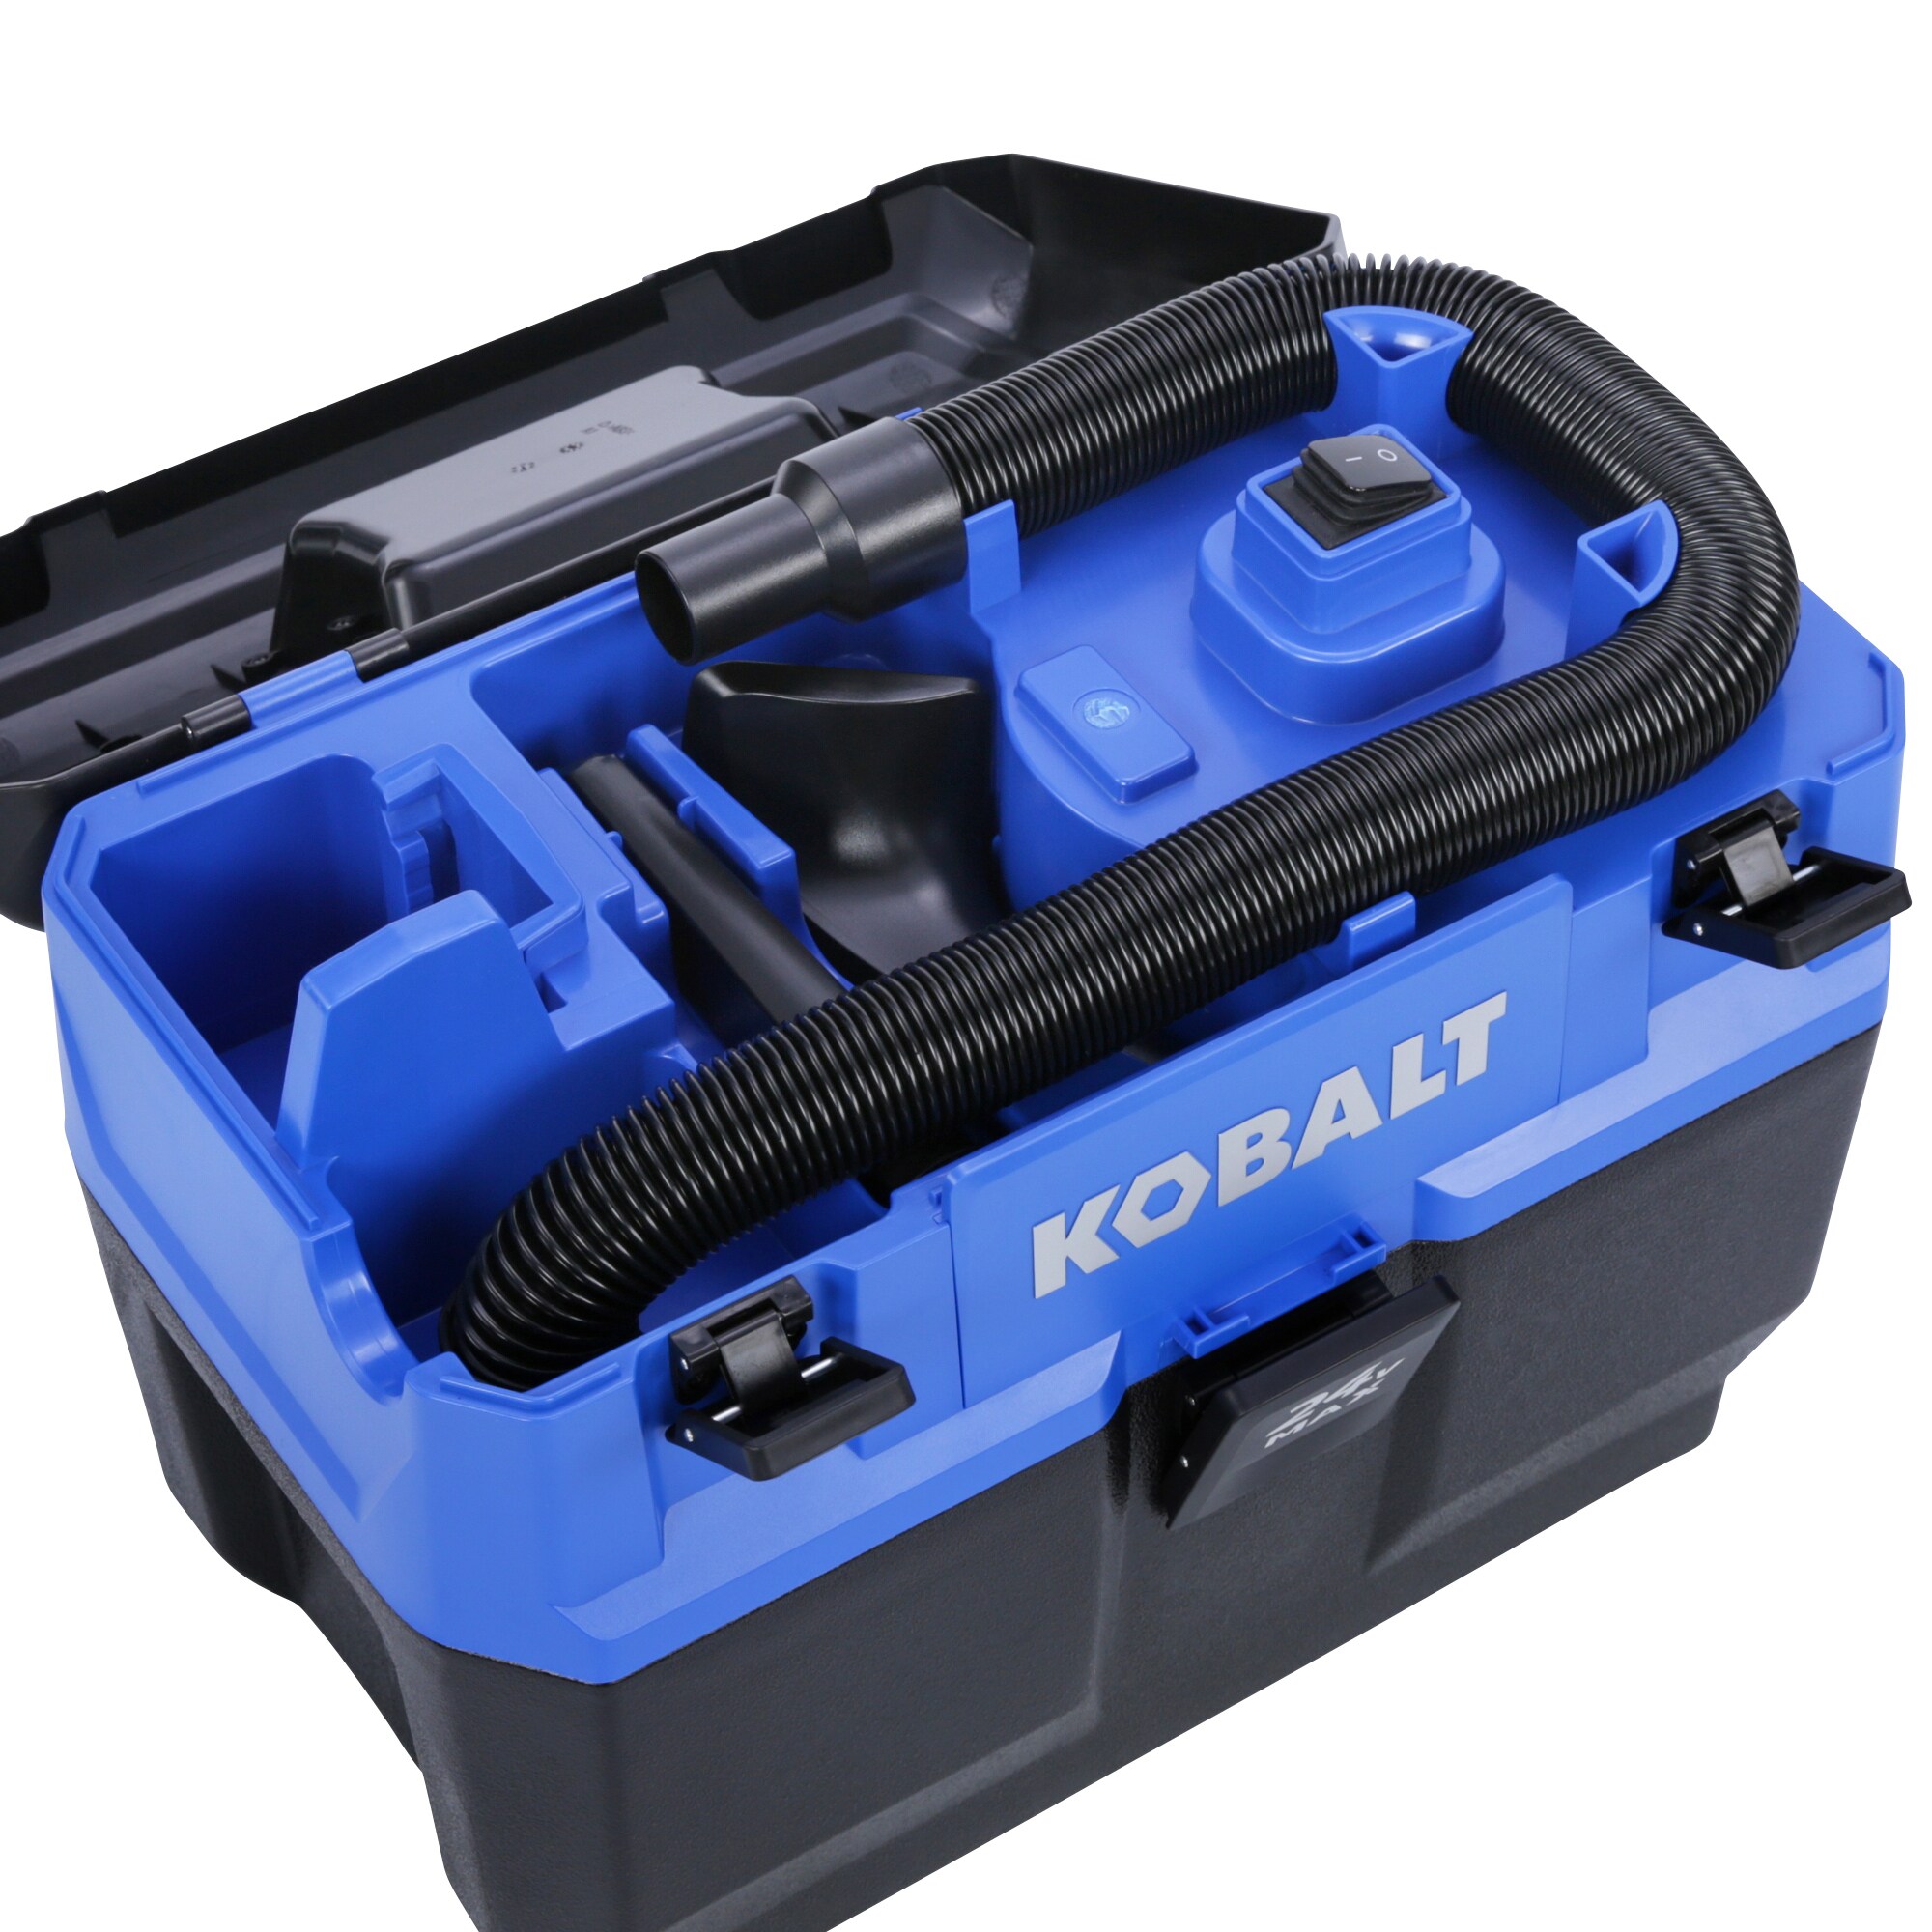 Kobalt 24 Volt Max 3 Gallon Cordless Handheld Wet Dry Shop Vacuum